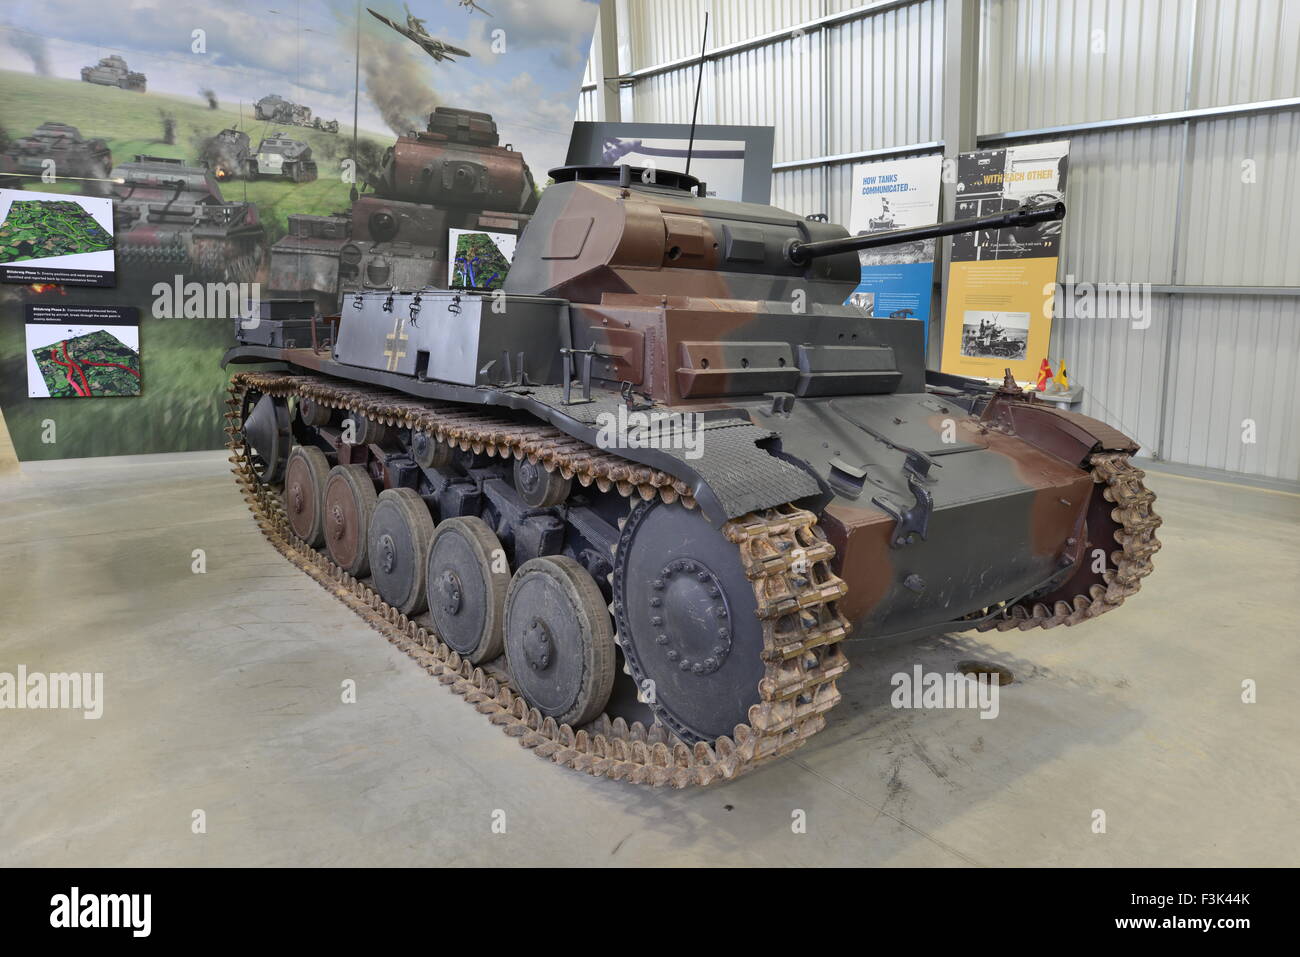 A tank at the Bovington Tank Museum in Bovington Stock Photo